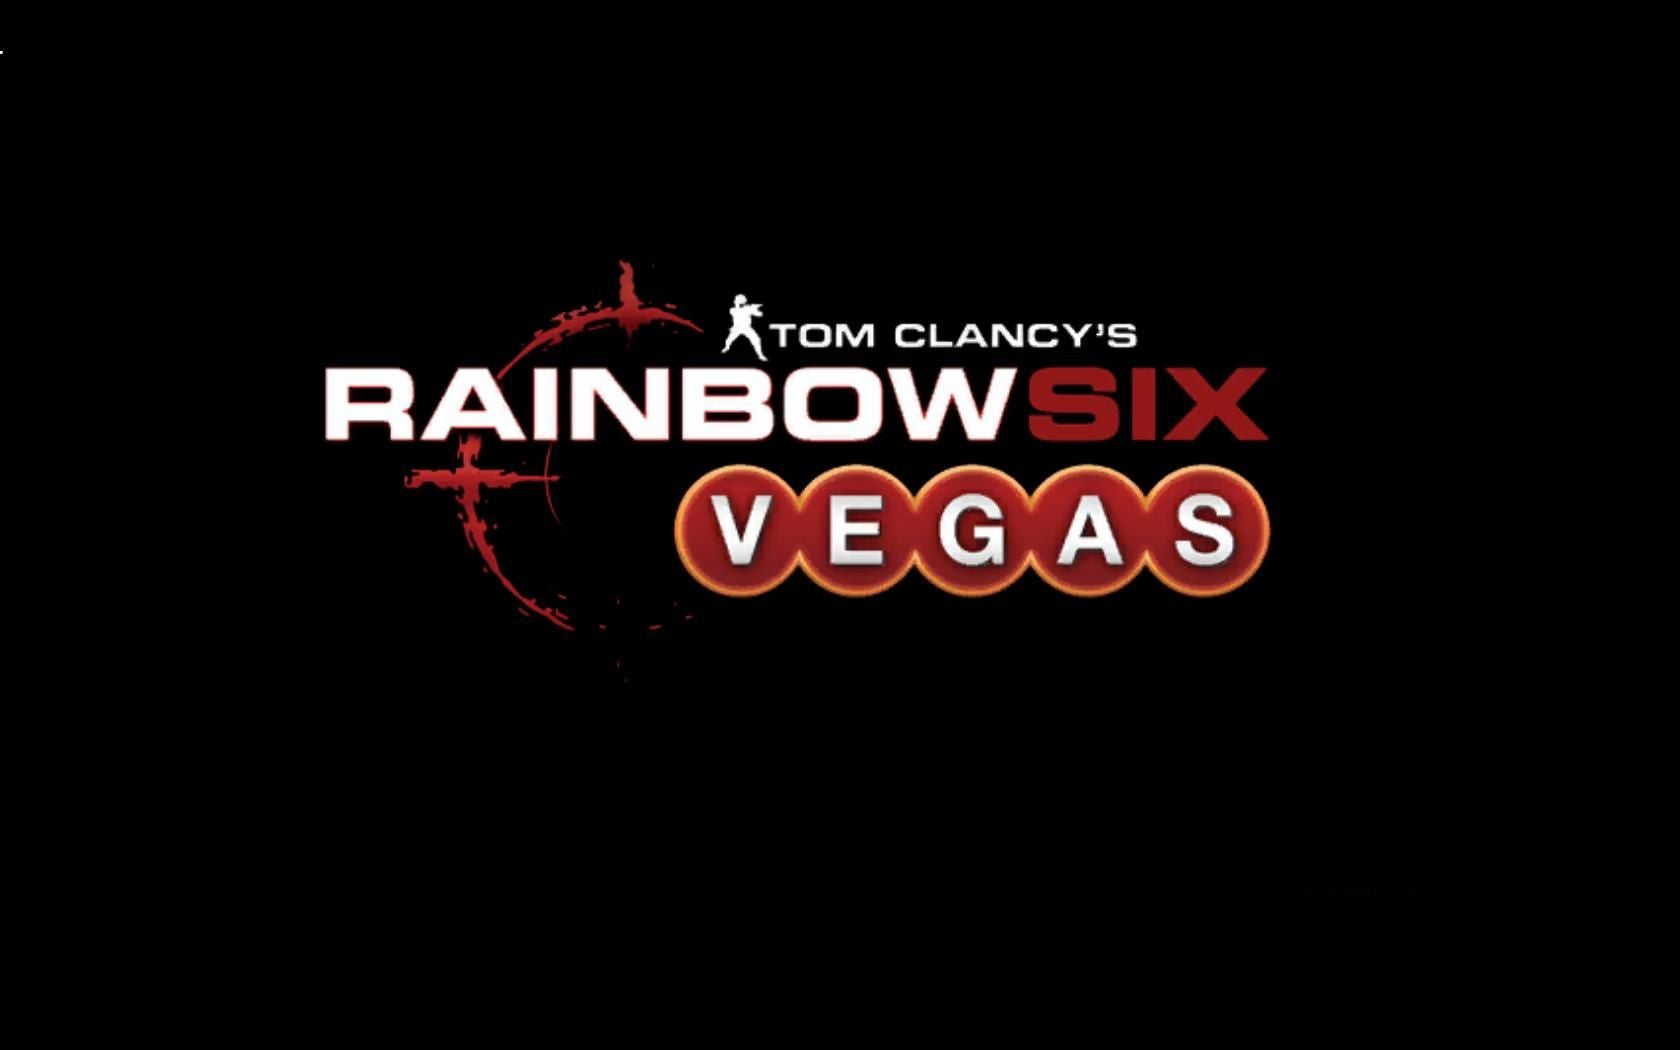 Tom Clancy's Rainbow Six: Vegas - Xbox 360 Game